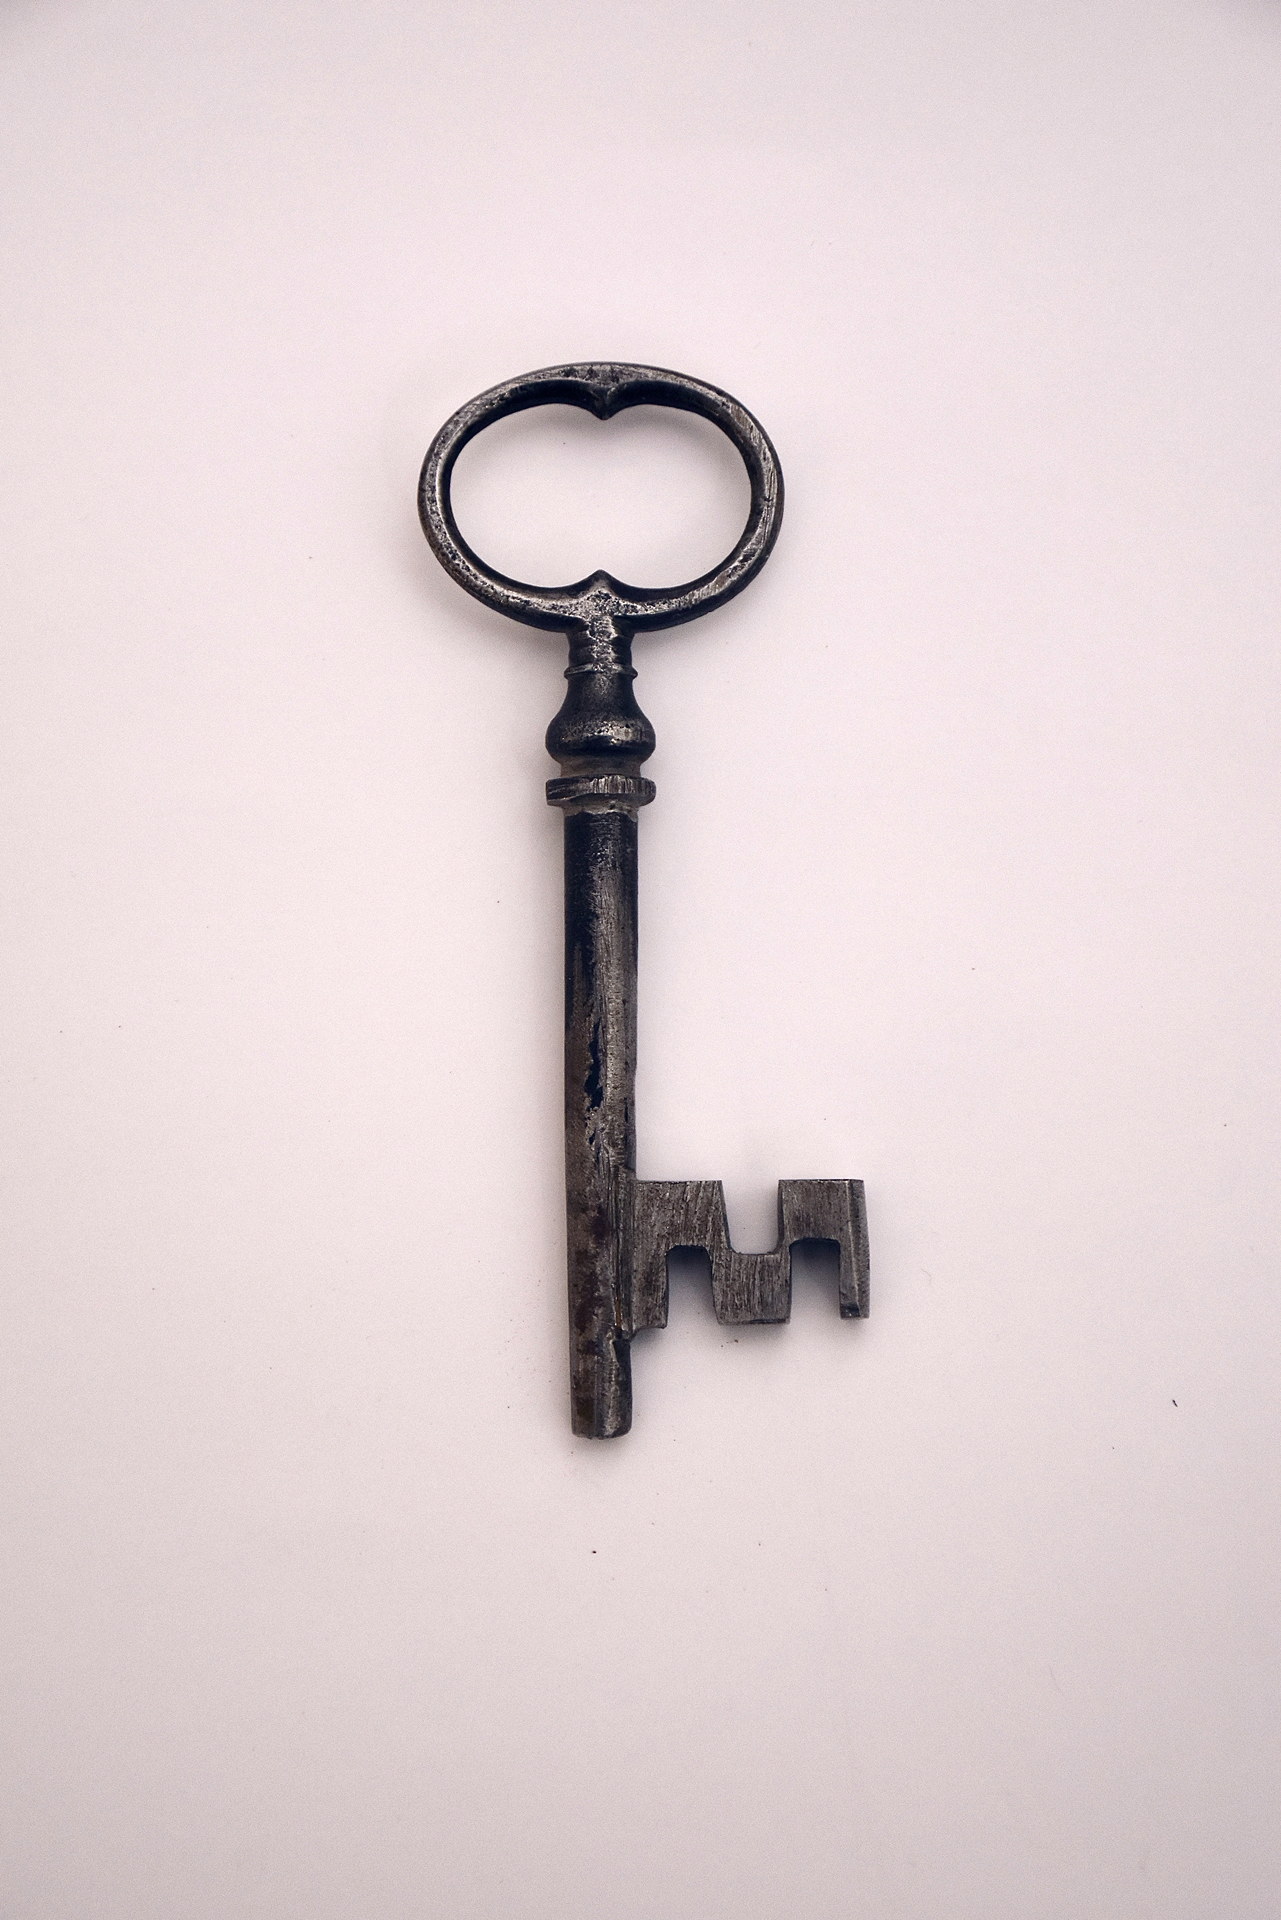 A skeleton key